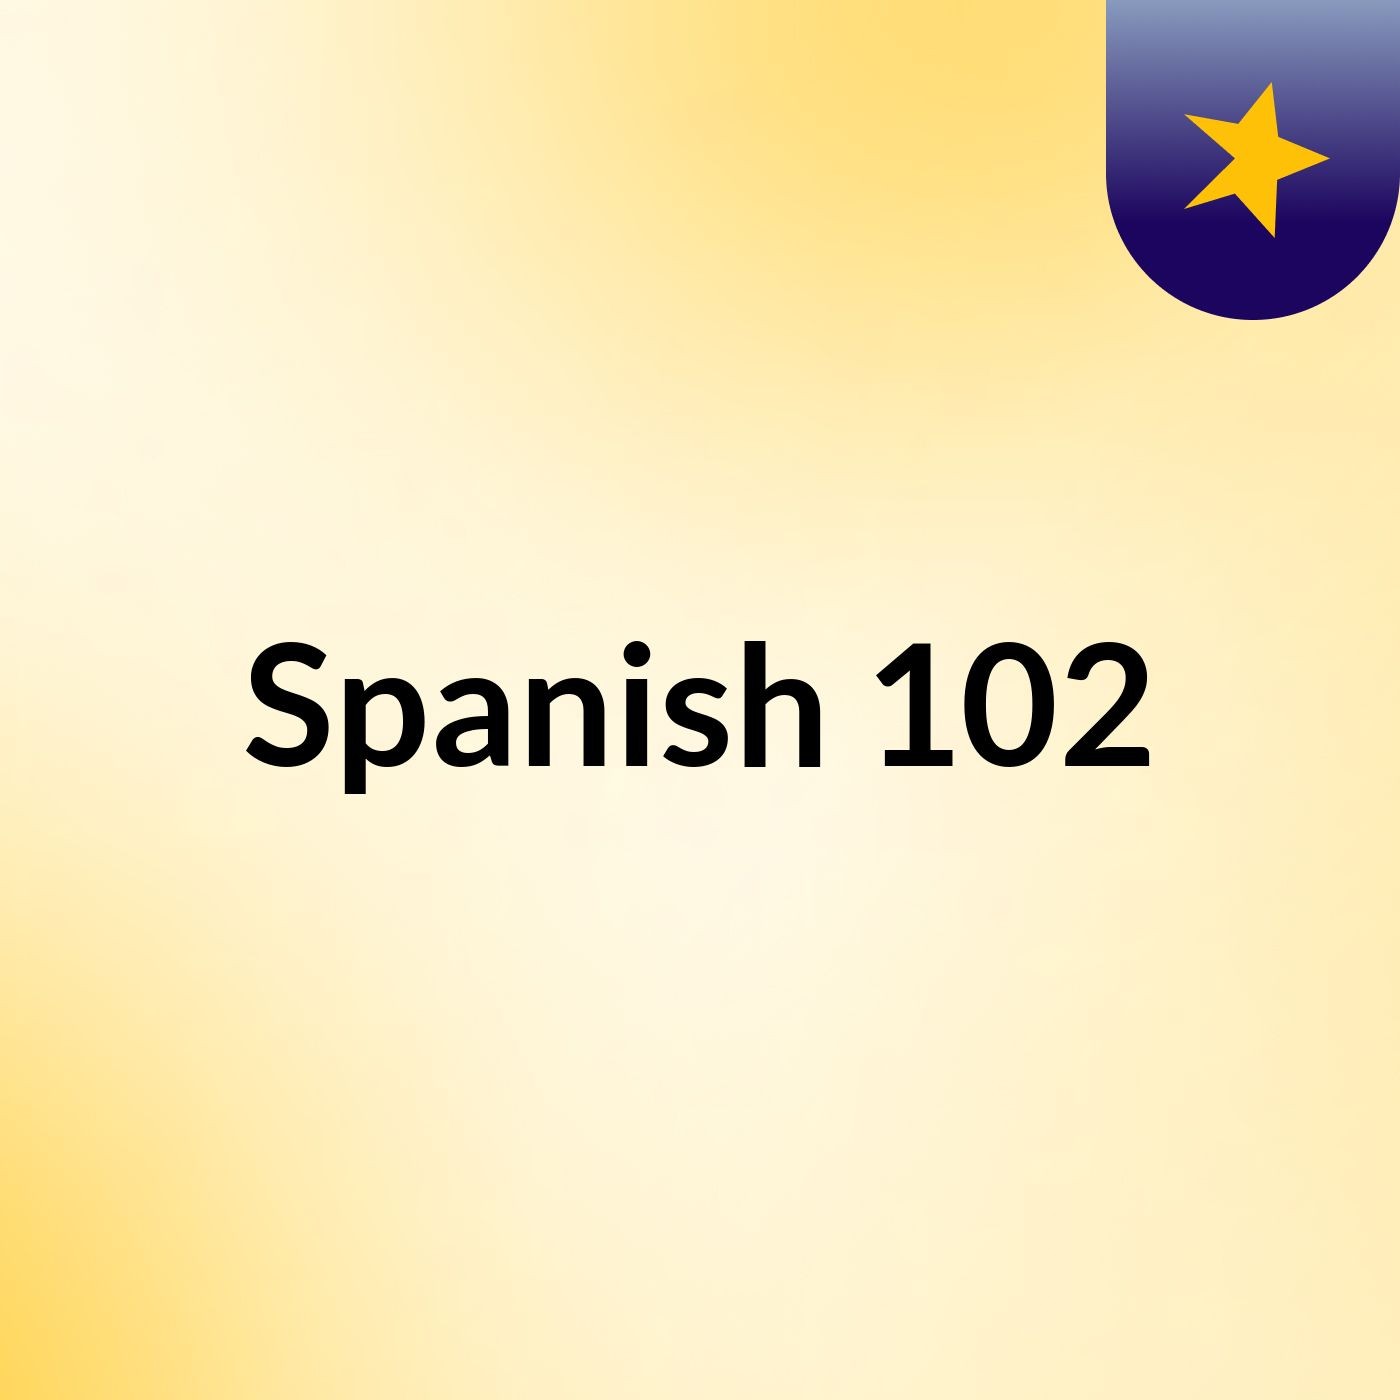 Spanish 102